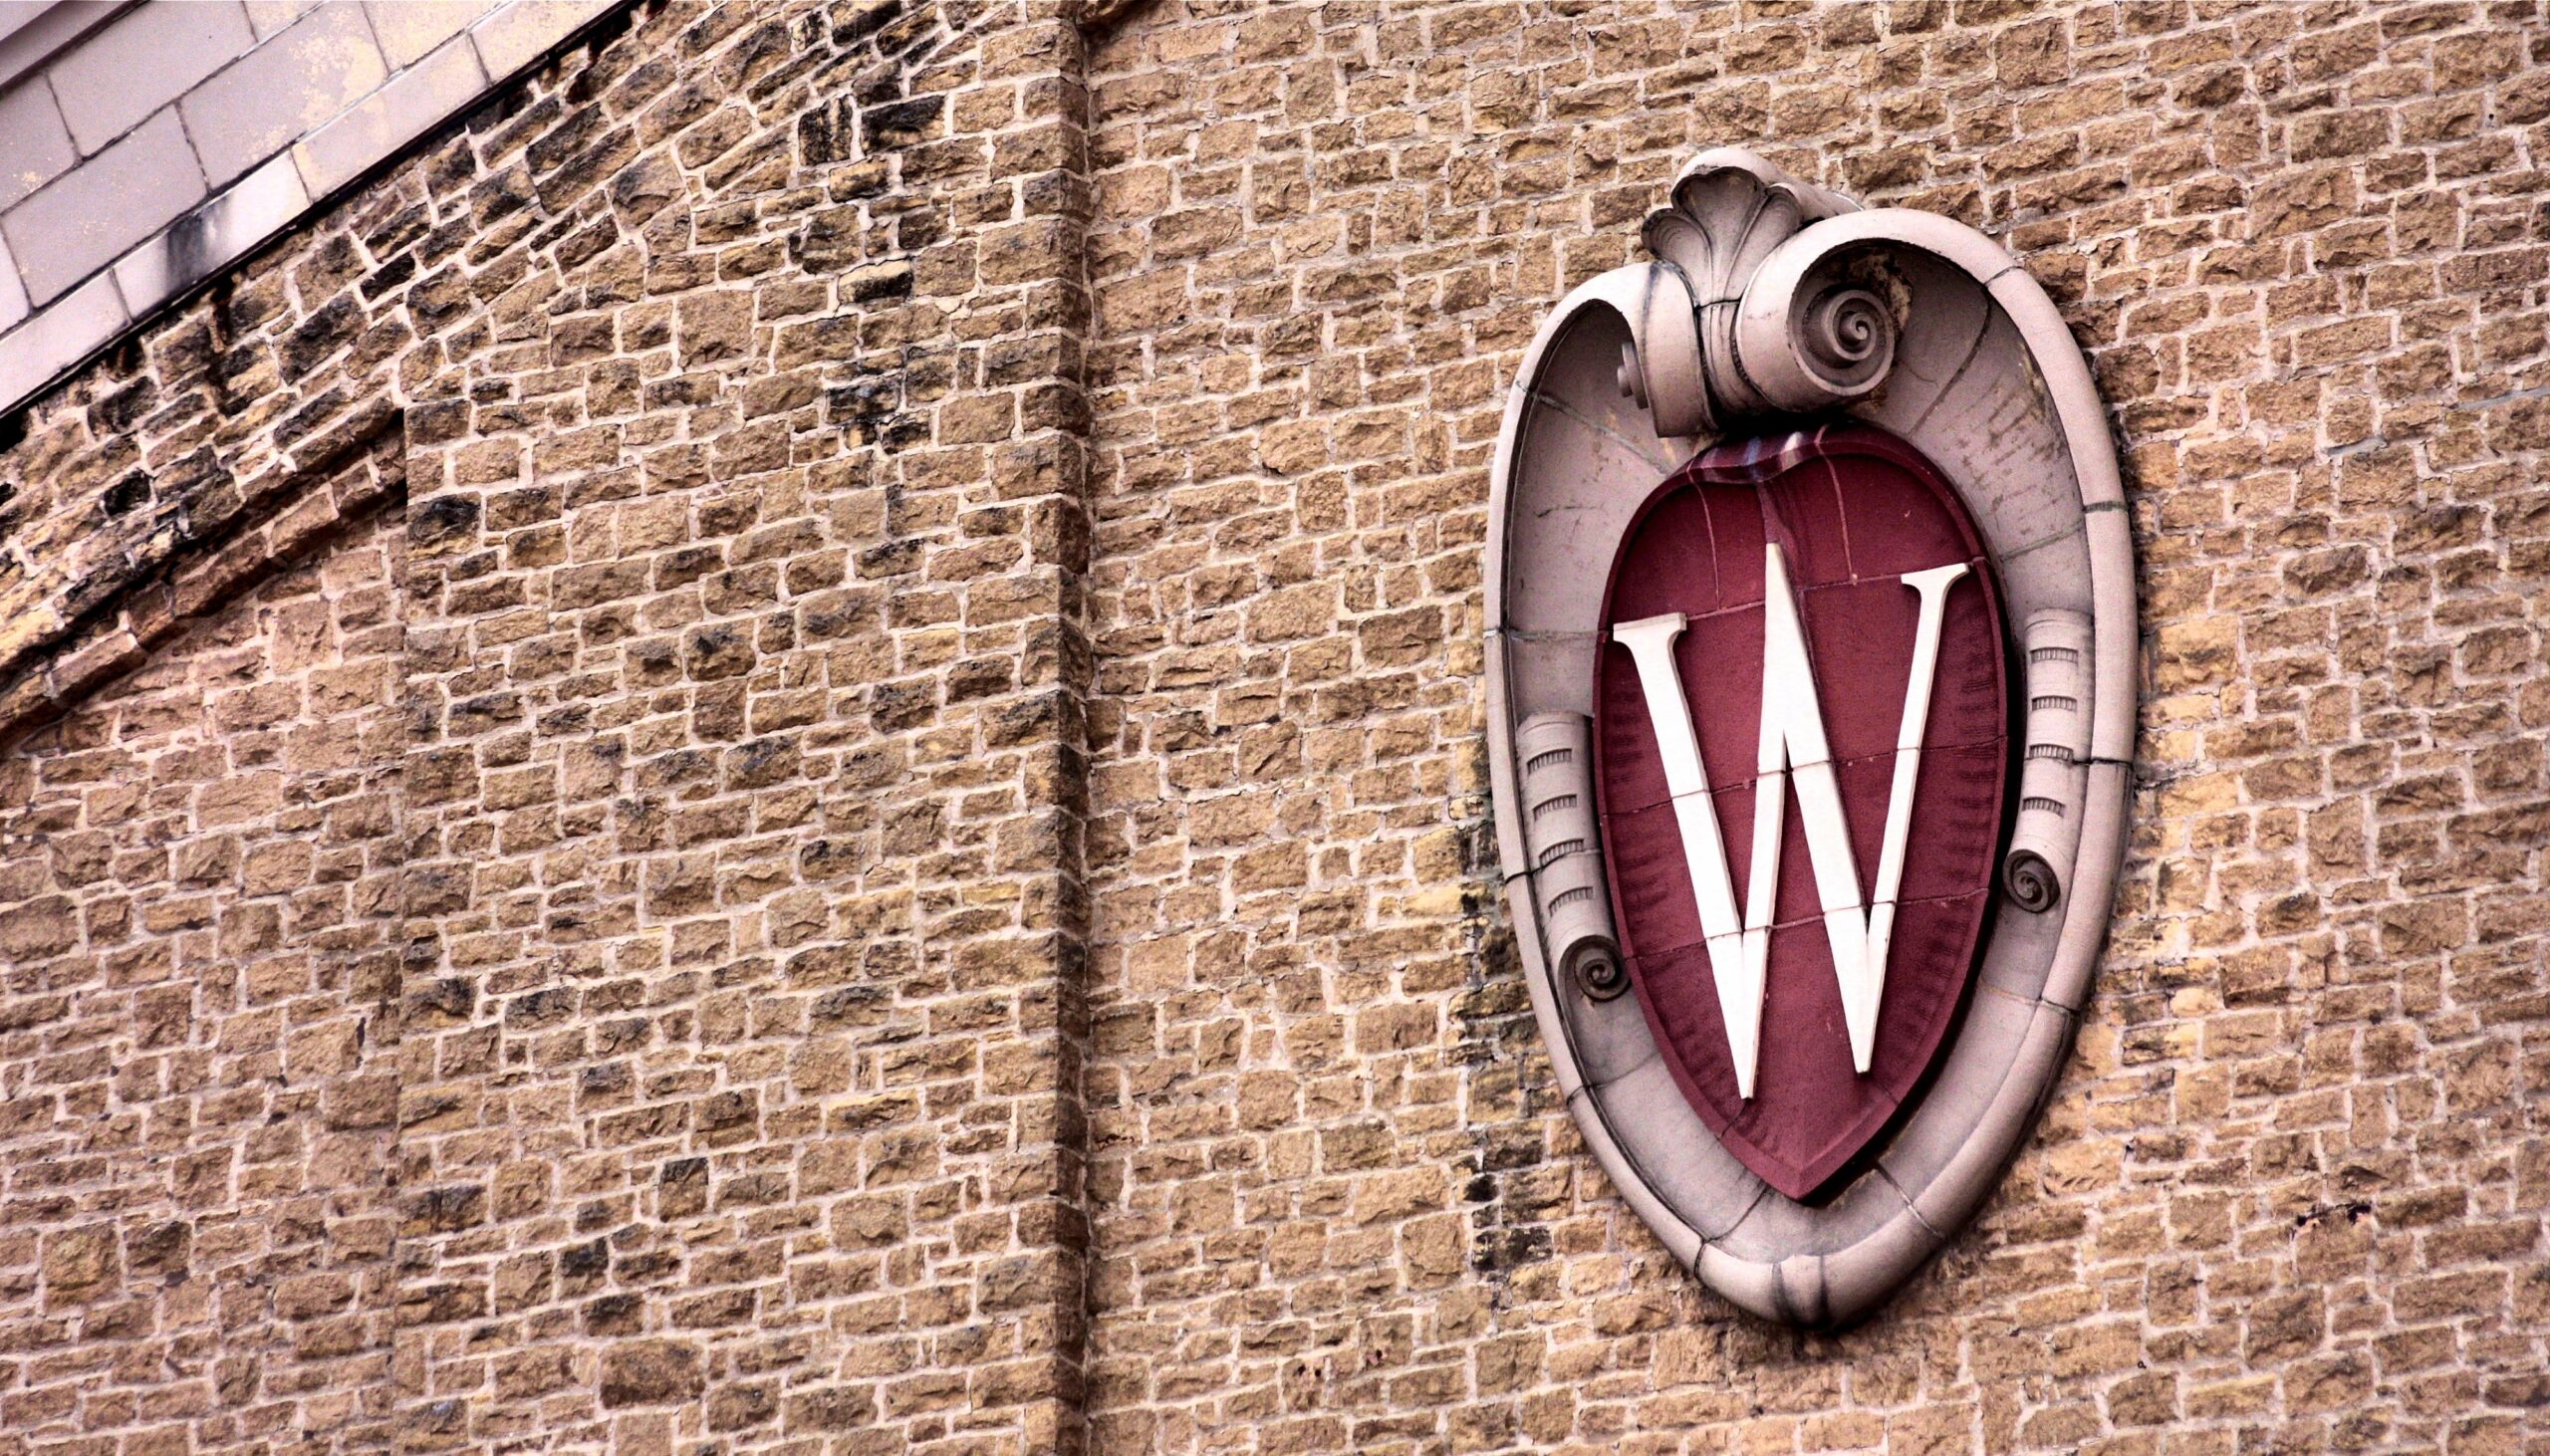 University of Wisconsin "W" shield